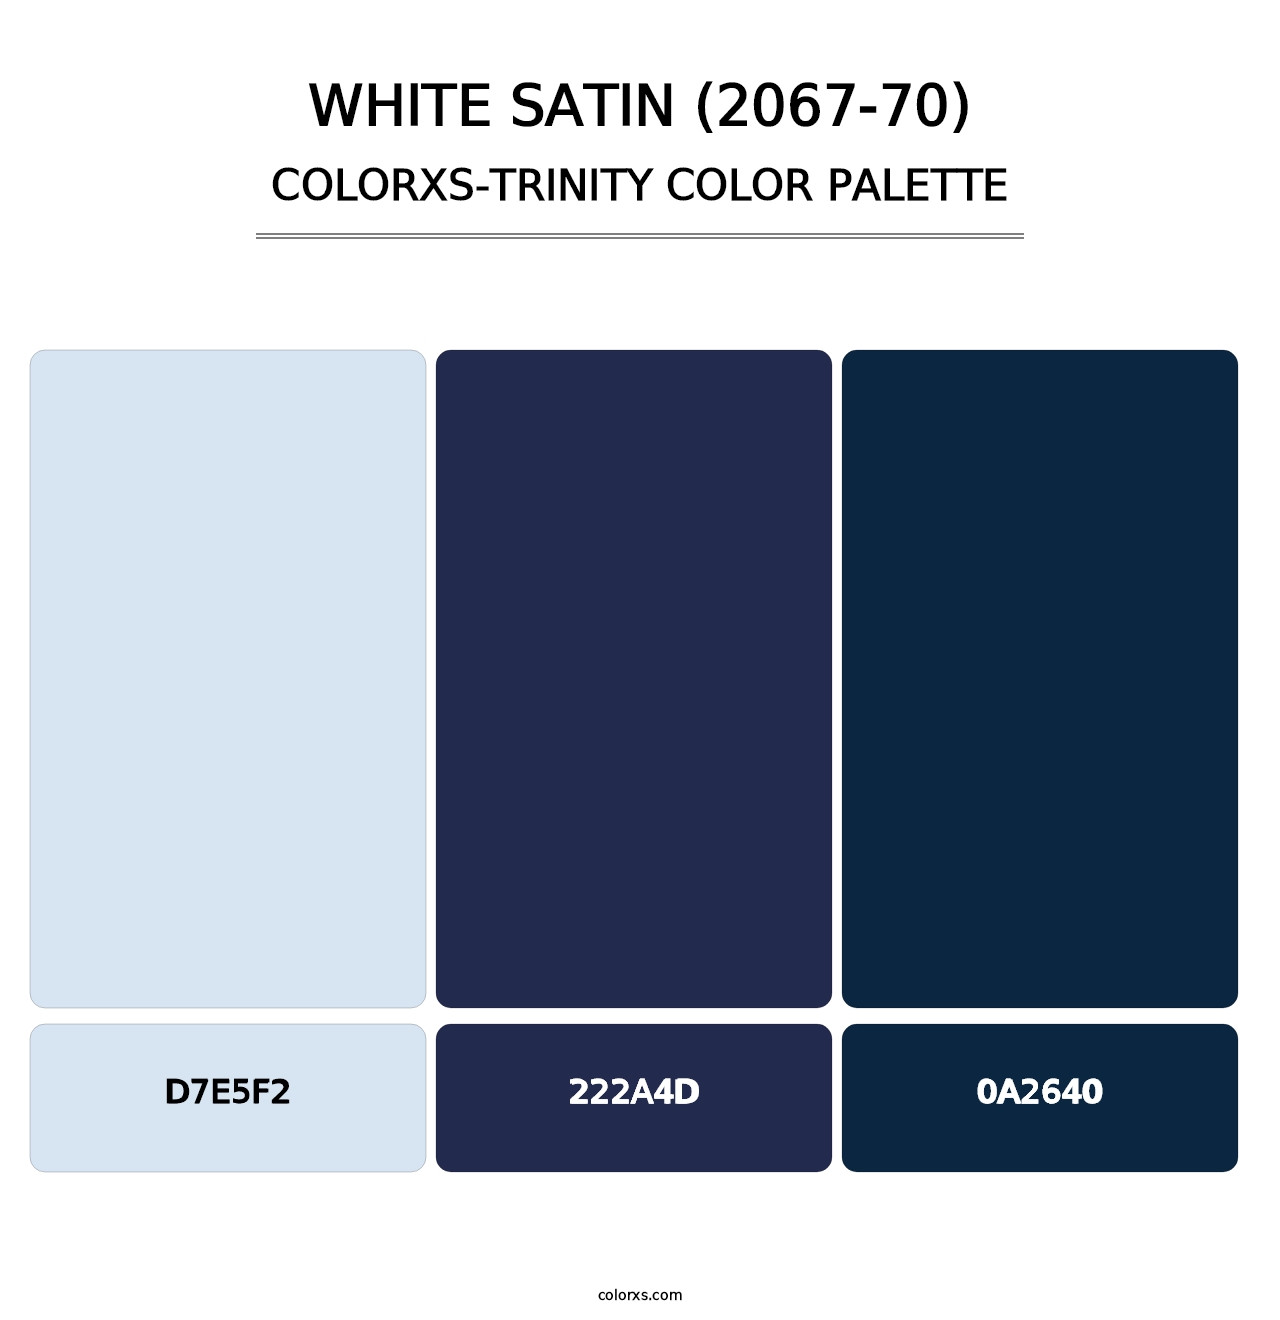 White Satin (2067-70) - Colorxs Trinity Palette